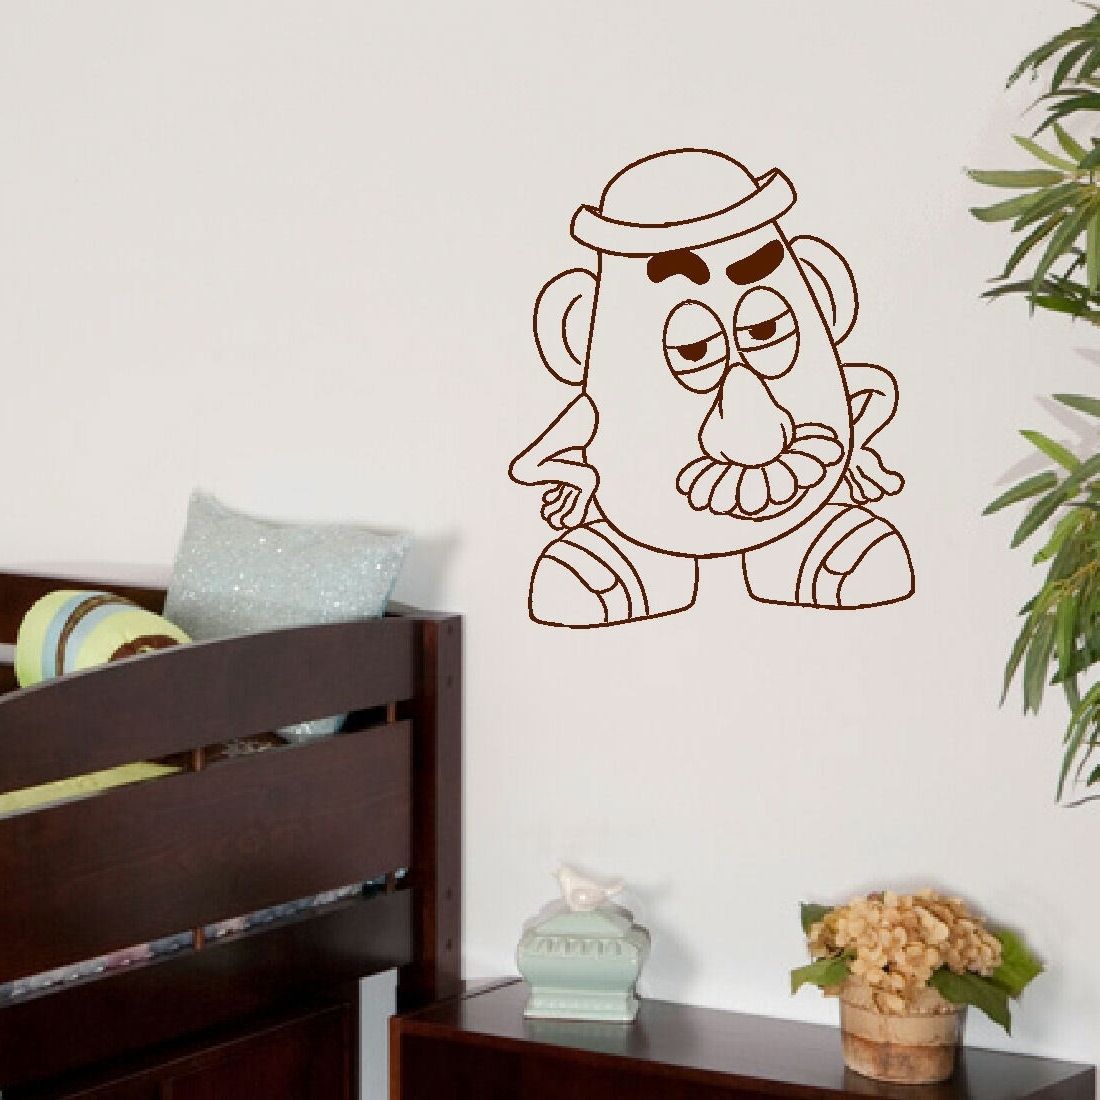 Favorite Bedroom Wall Art Regarding Large Toy Story Potato Head Childrens Bedroom Wall Art Sticker (View 15 of 15)